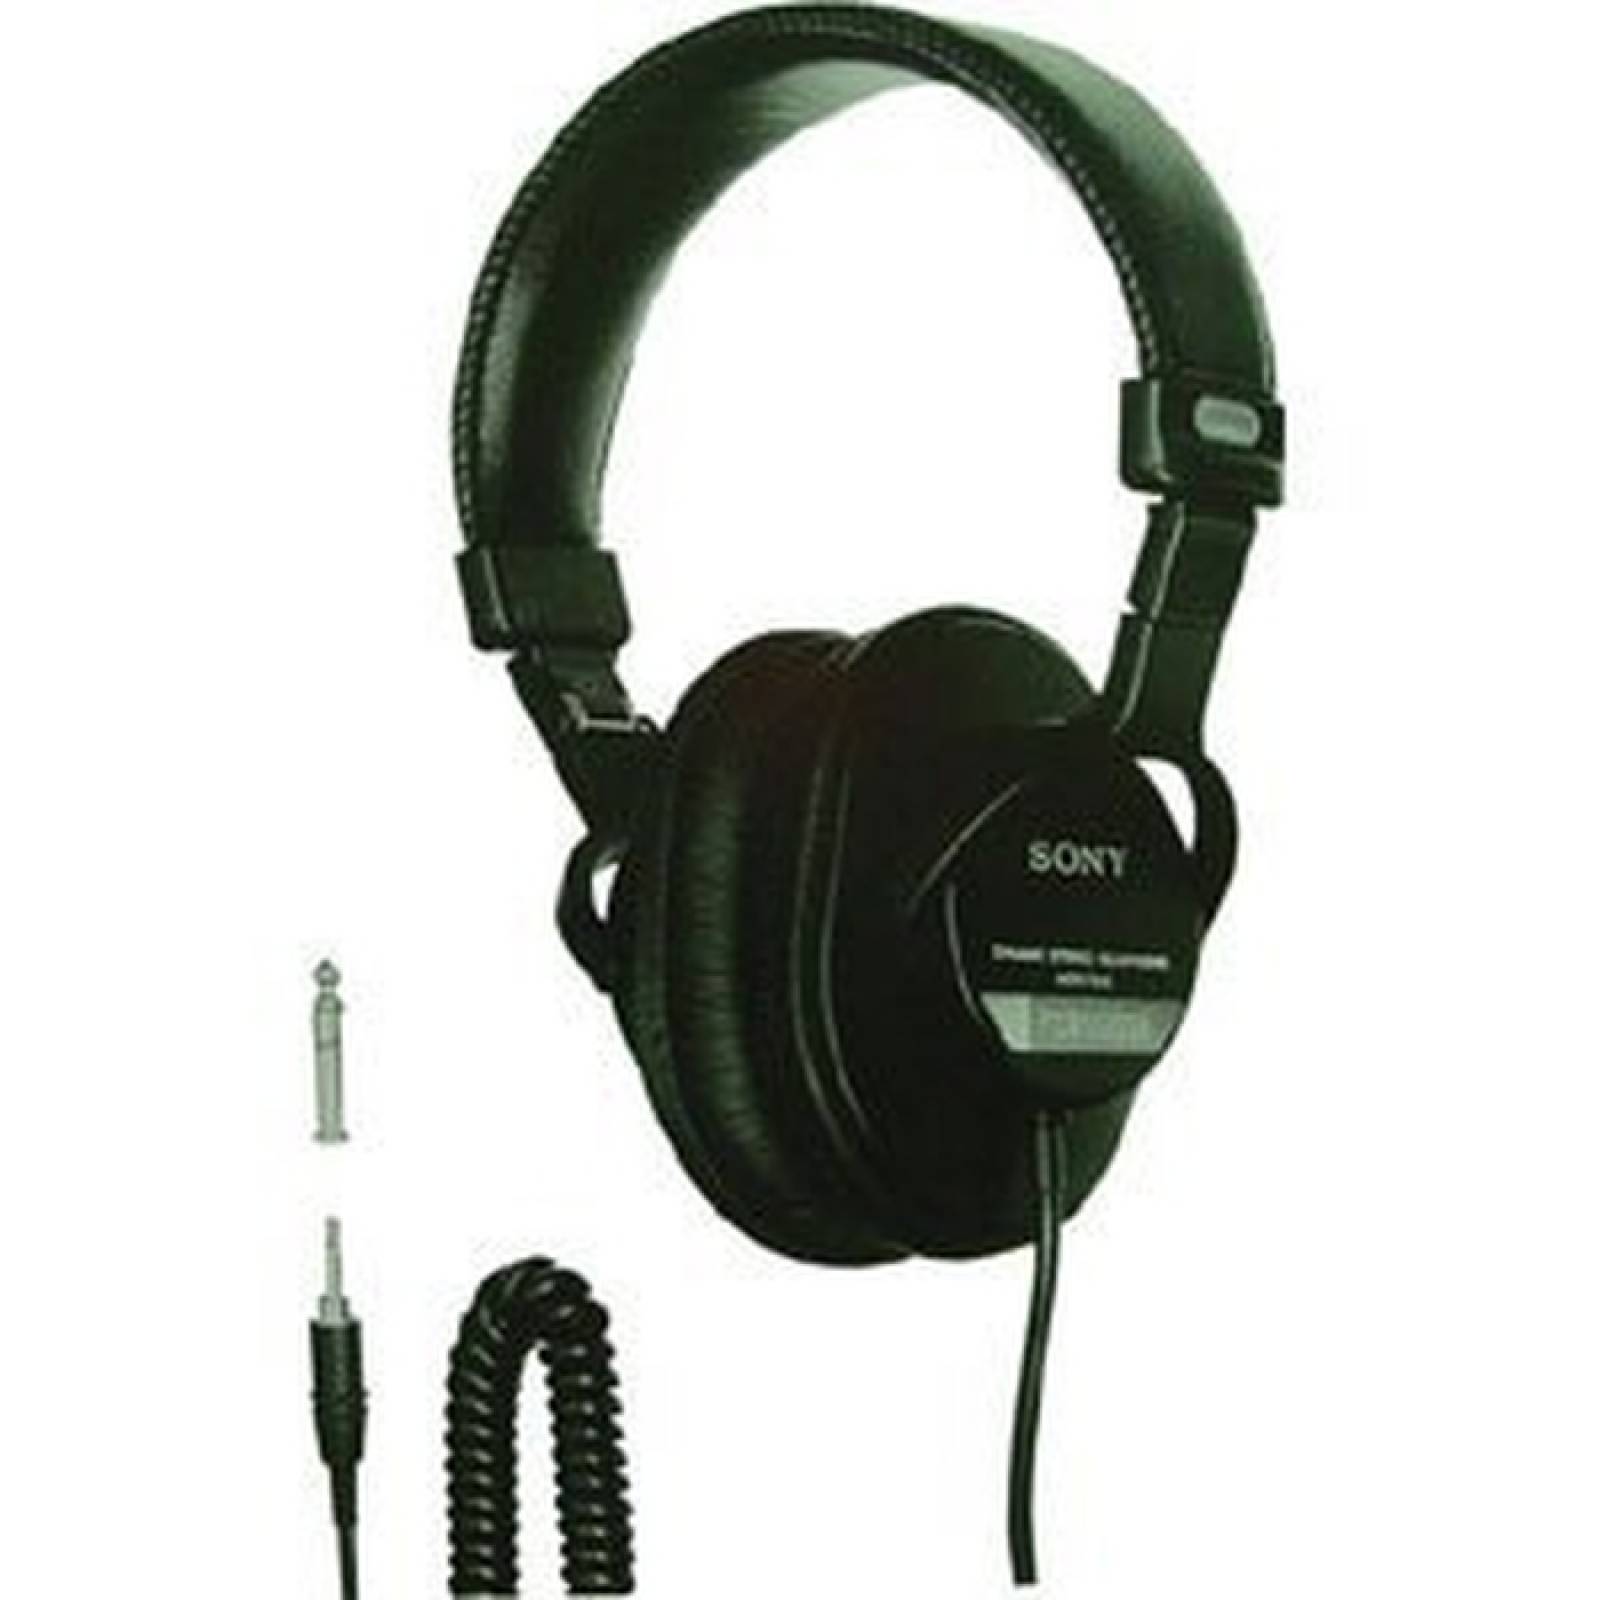 Sony MDR7506 profesional de auriculares